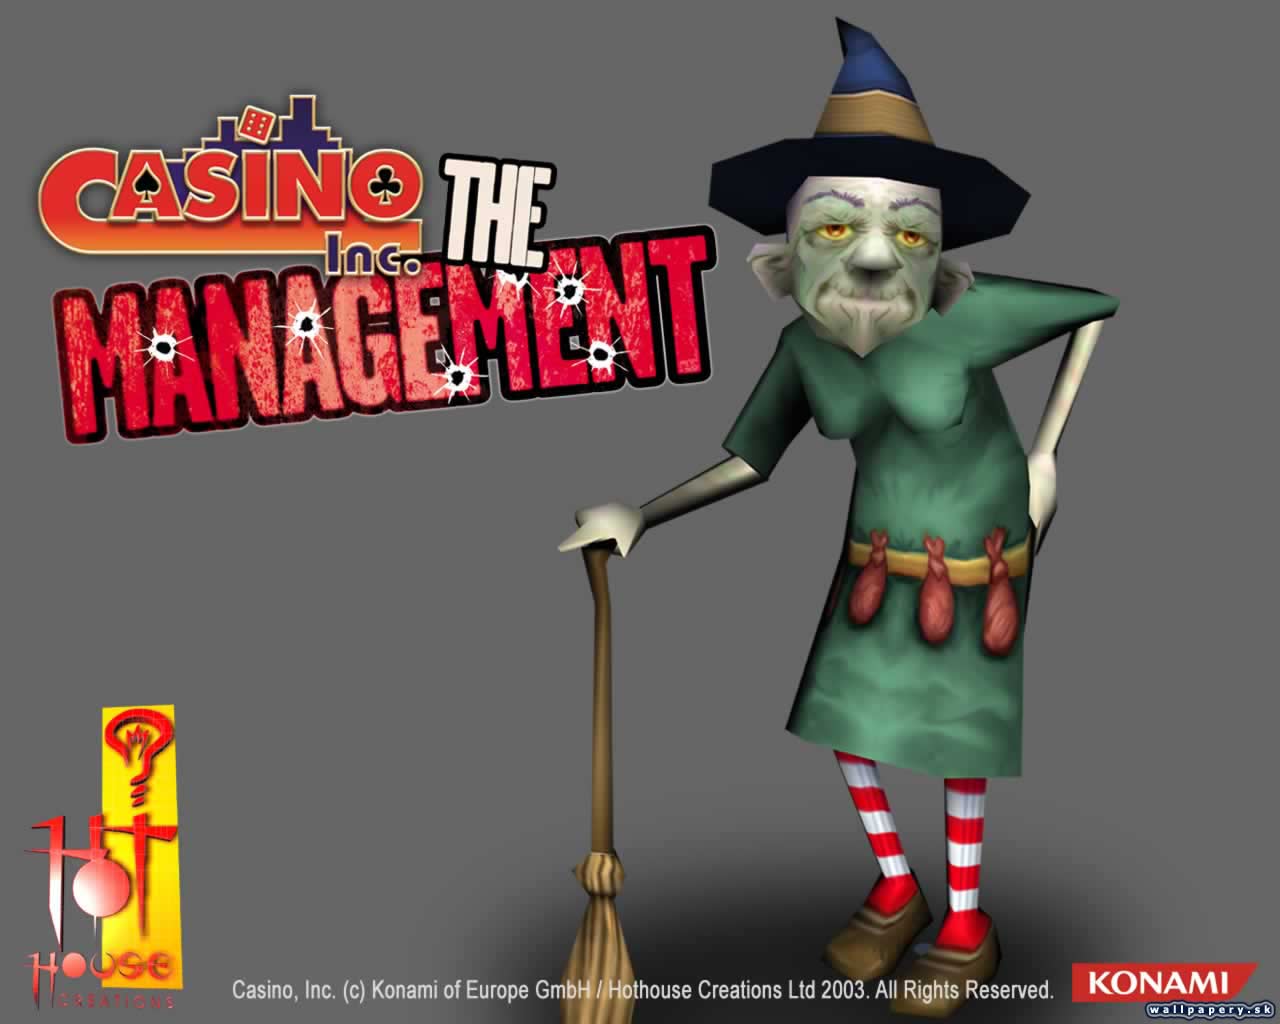 Casino Inc.: The Management - wallpaper 1